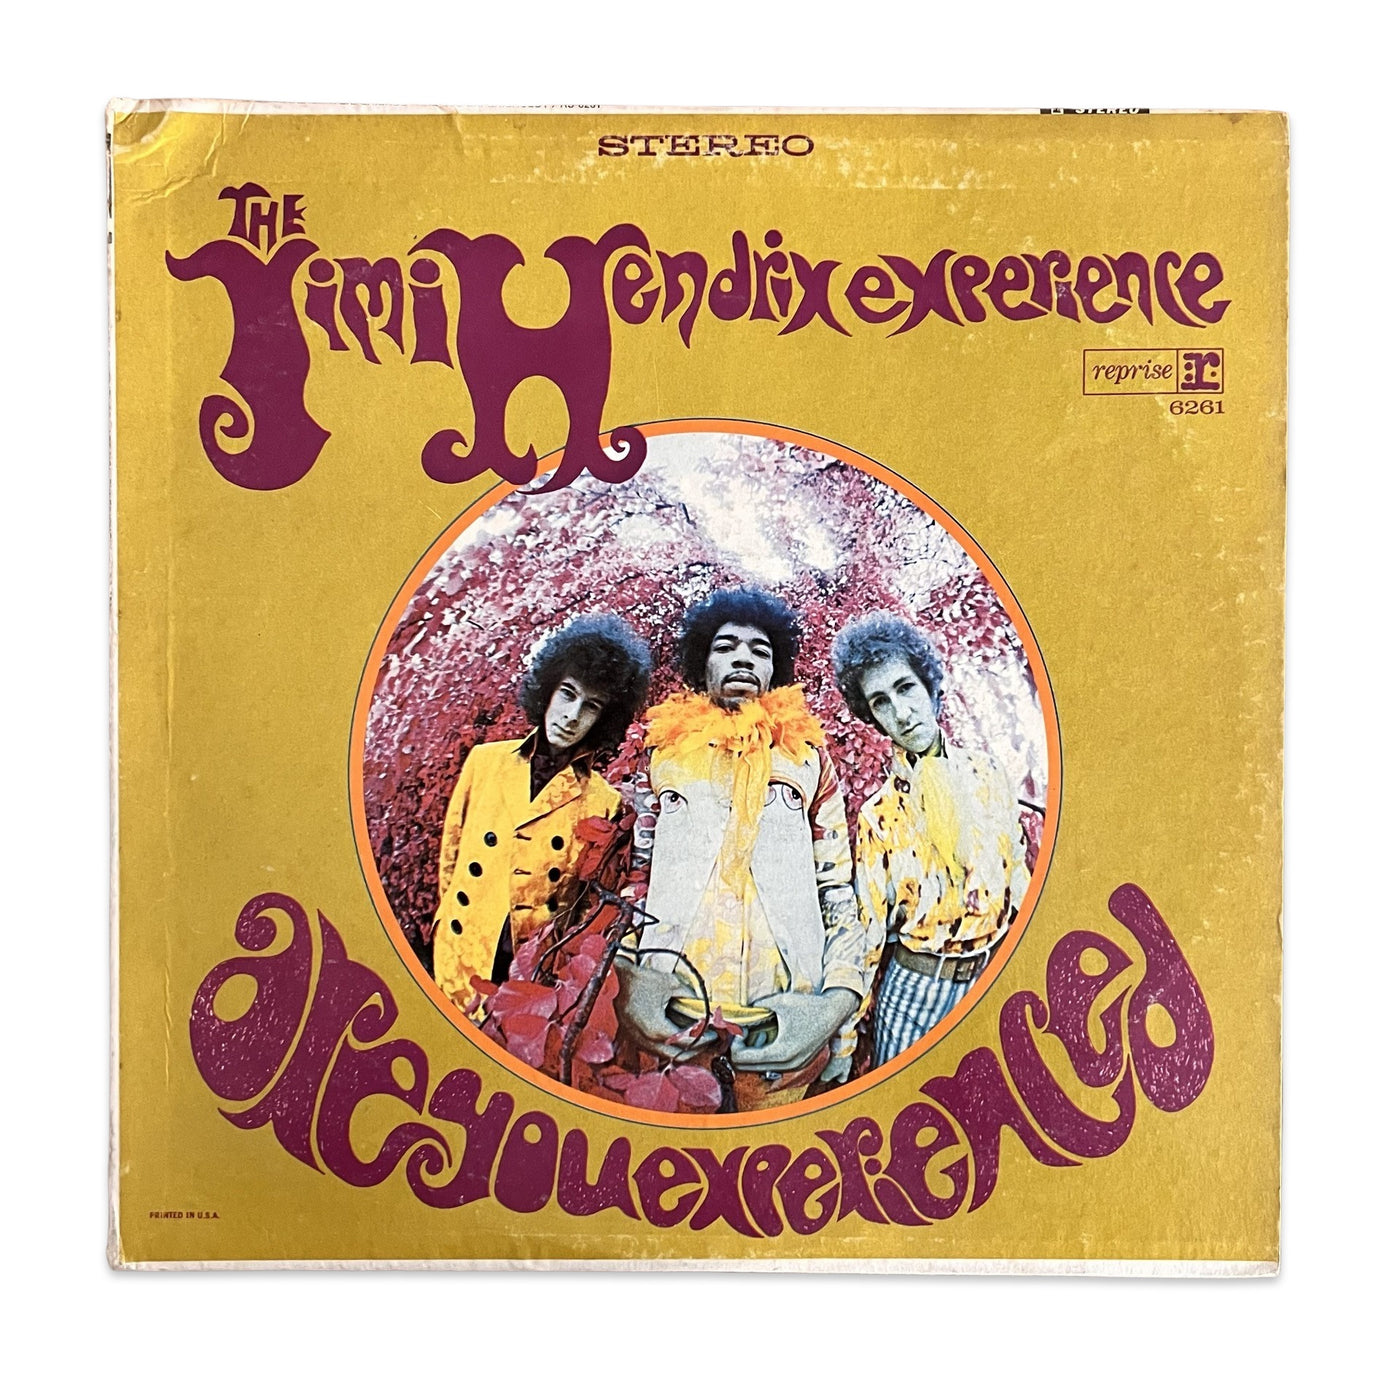 The Jimi Hendrix Experience – Are You Experienced - 1968 Pitman Repress